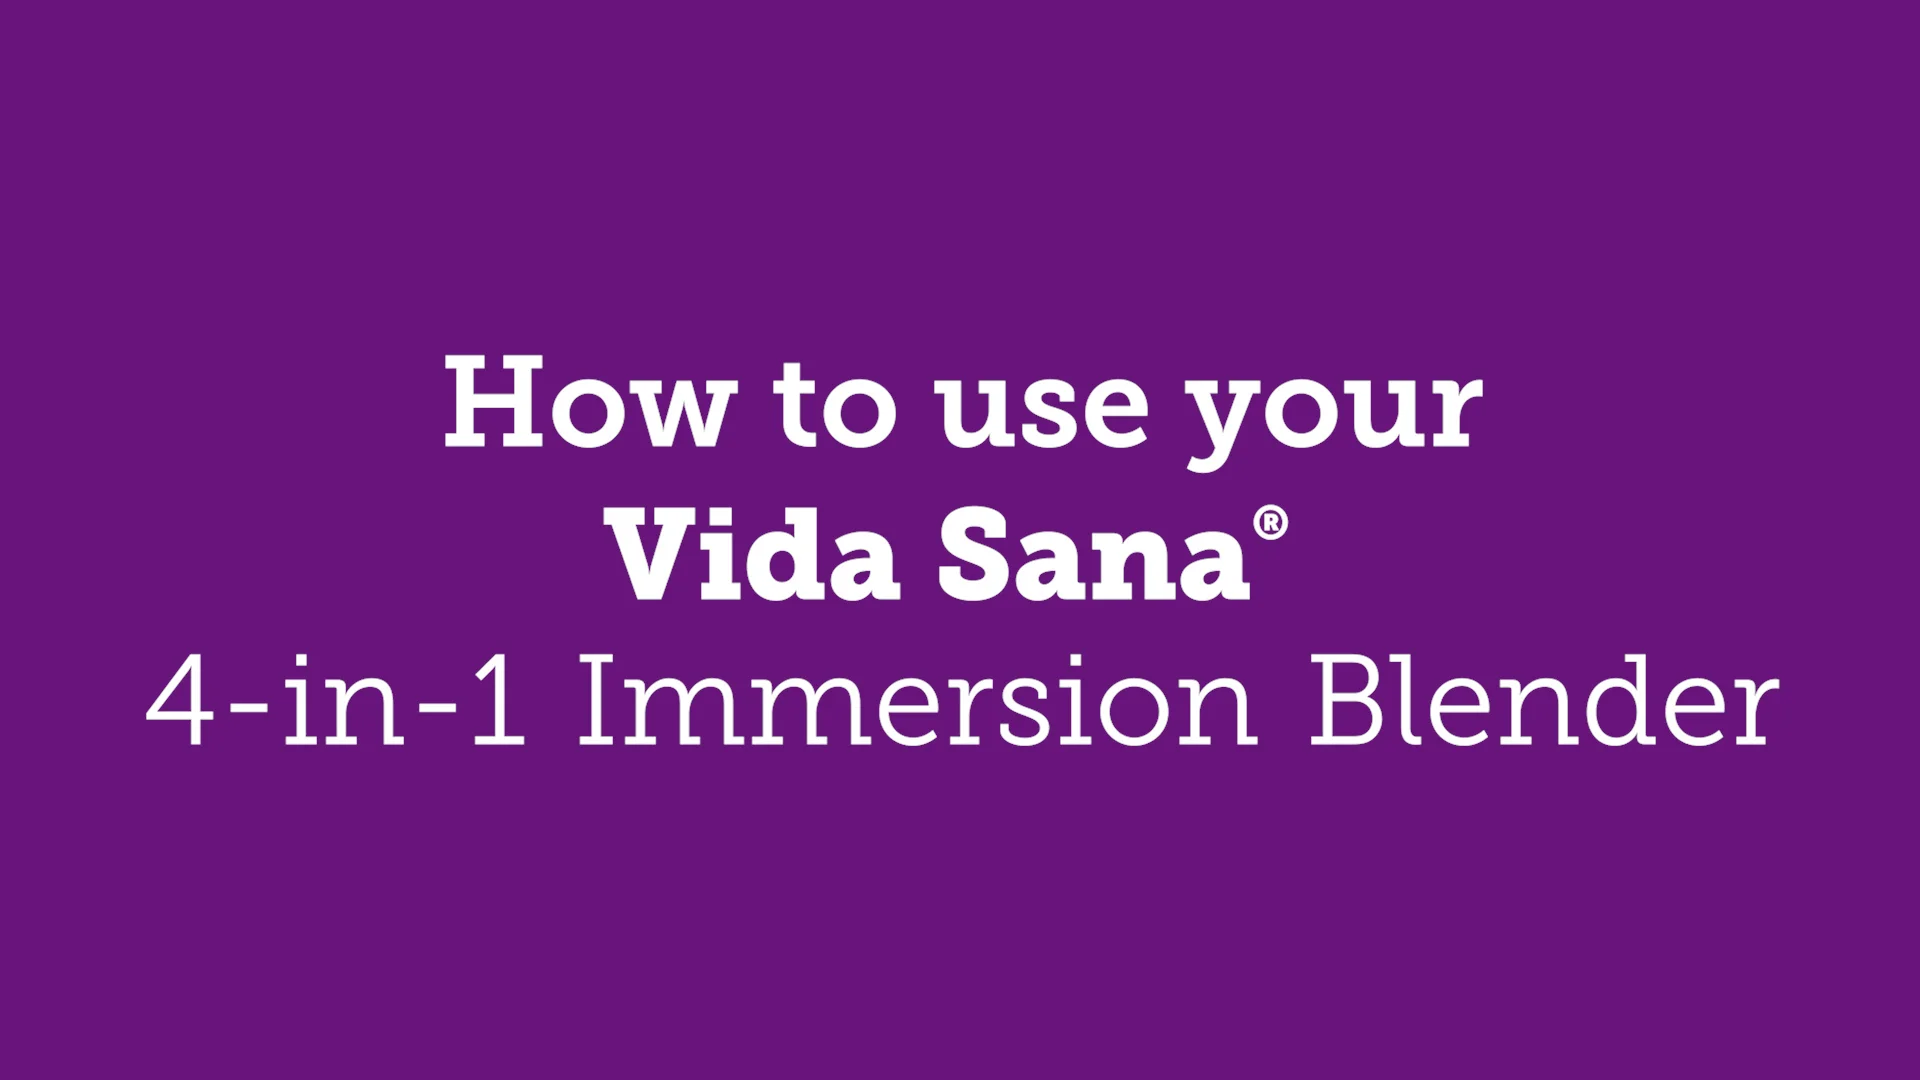 How to use your Vida Sana® 4-in-1 Immersion Blender - V0187 on Vimeo